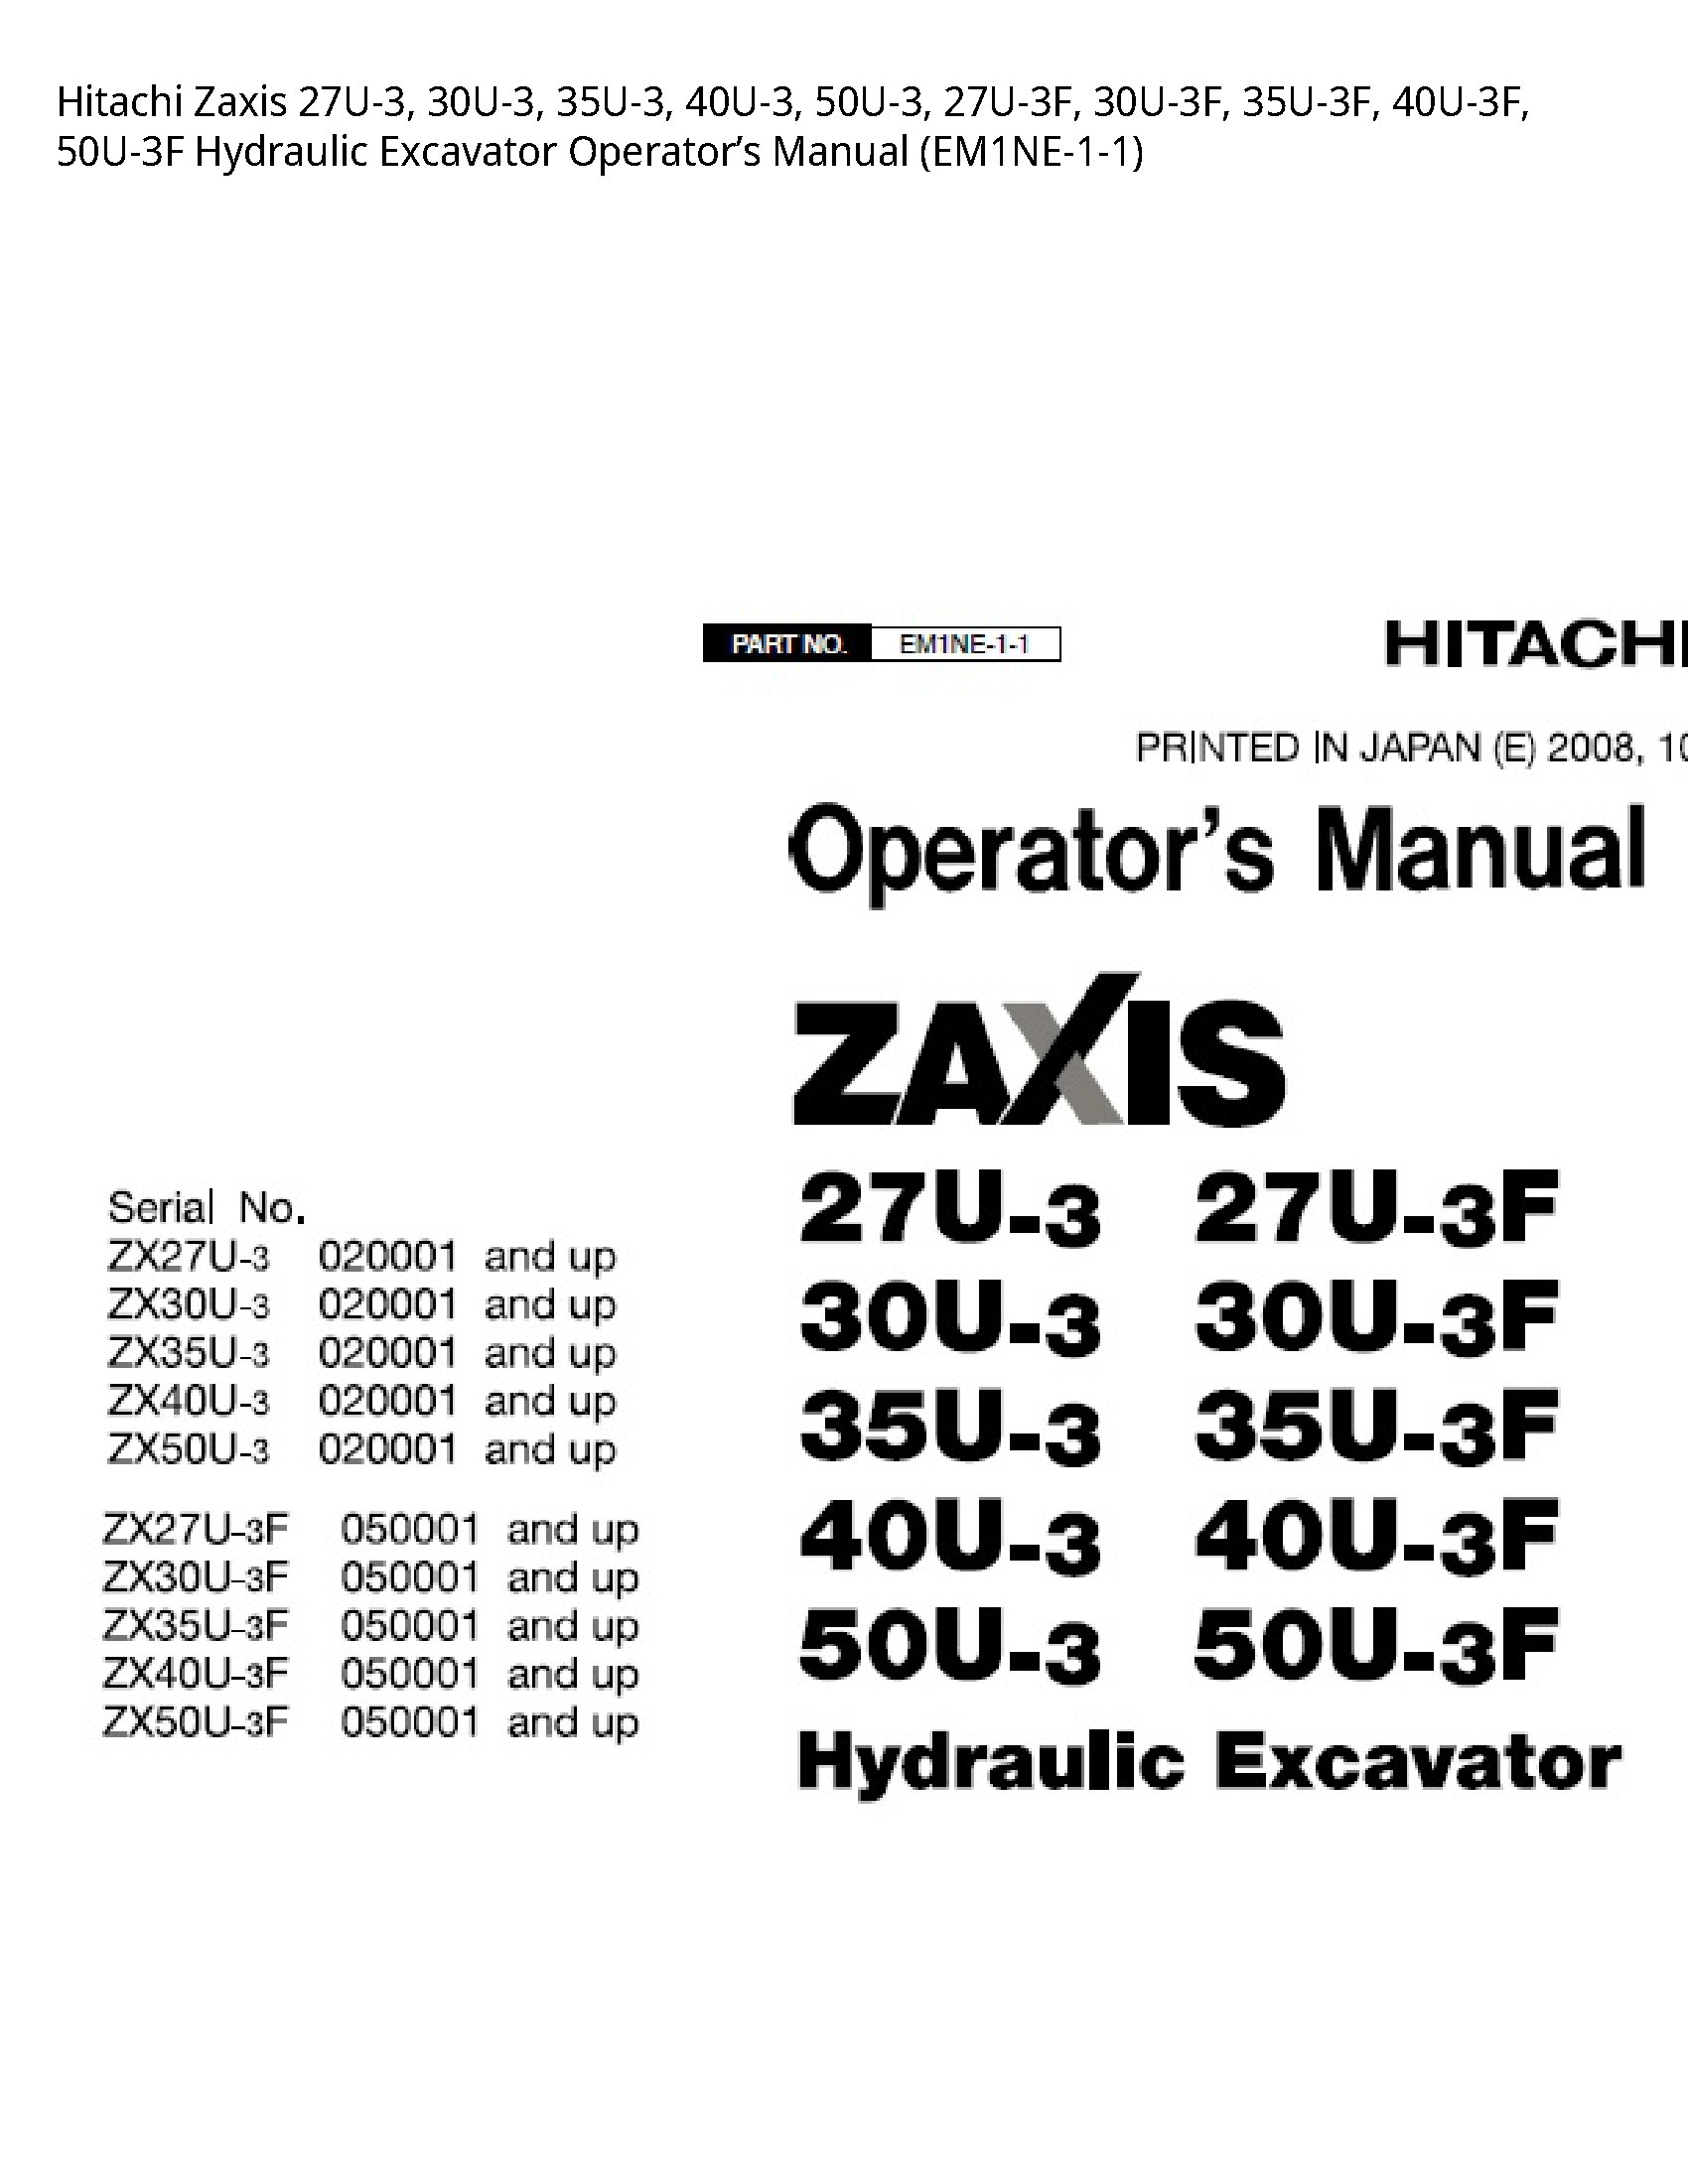 Hitachi 27U-3 Zaxis Hydraulic Excavator Operator’s manual